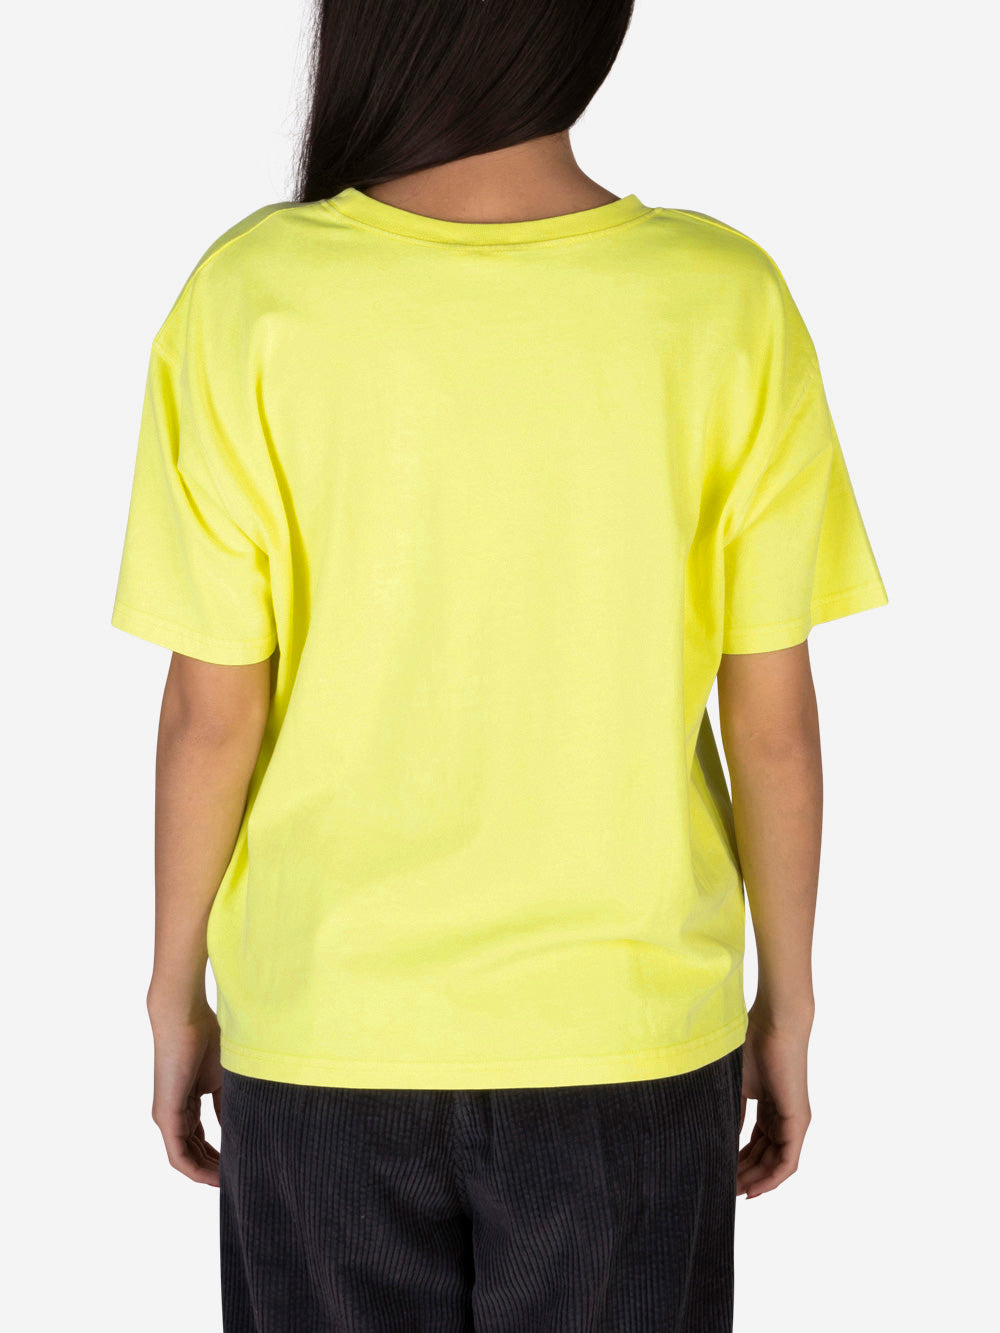 AMERICAN VINTAGE T-shirt Fizvalley giallo fluo Giallo fluo Urbanstaroma